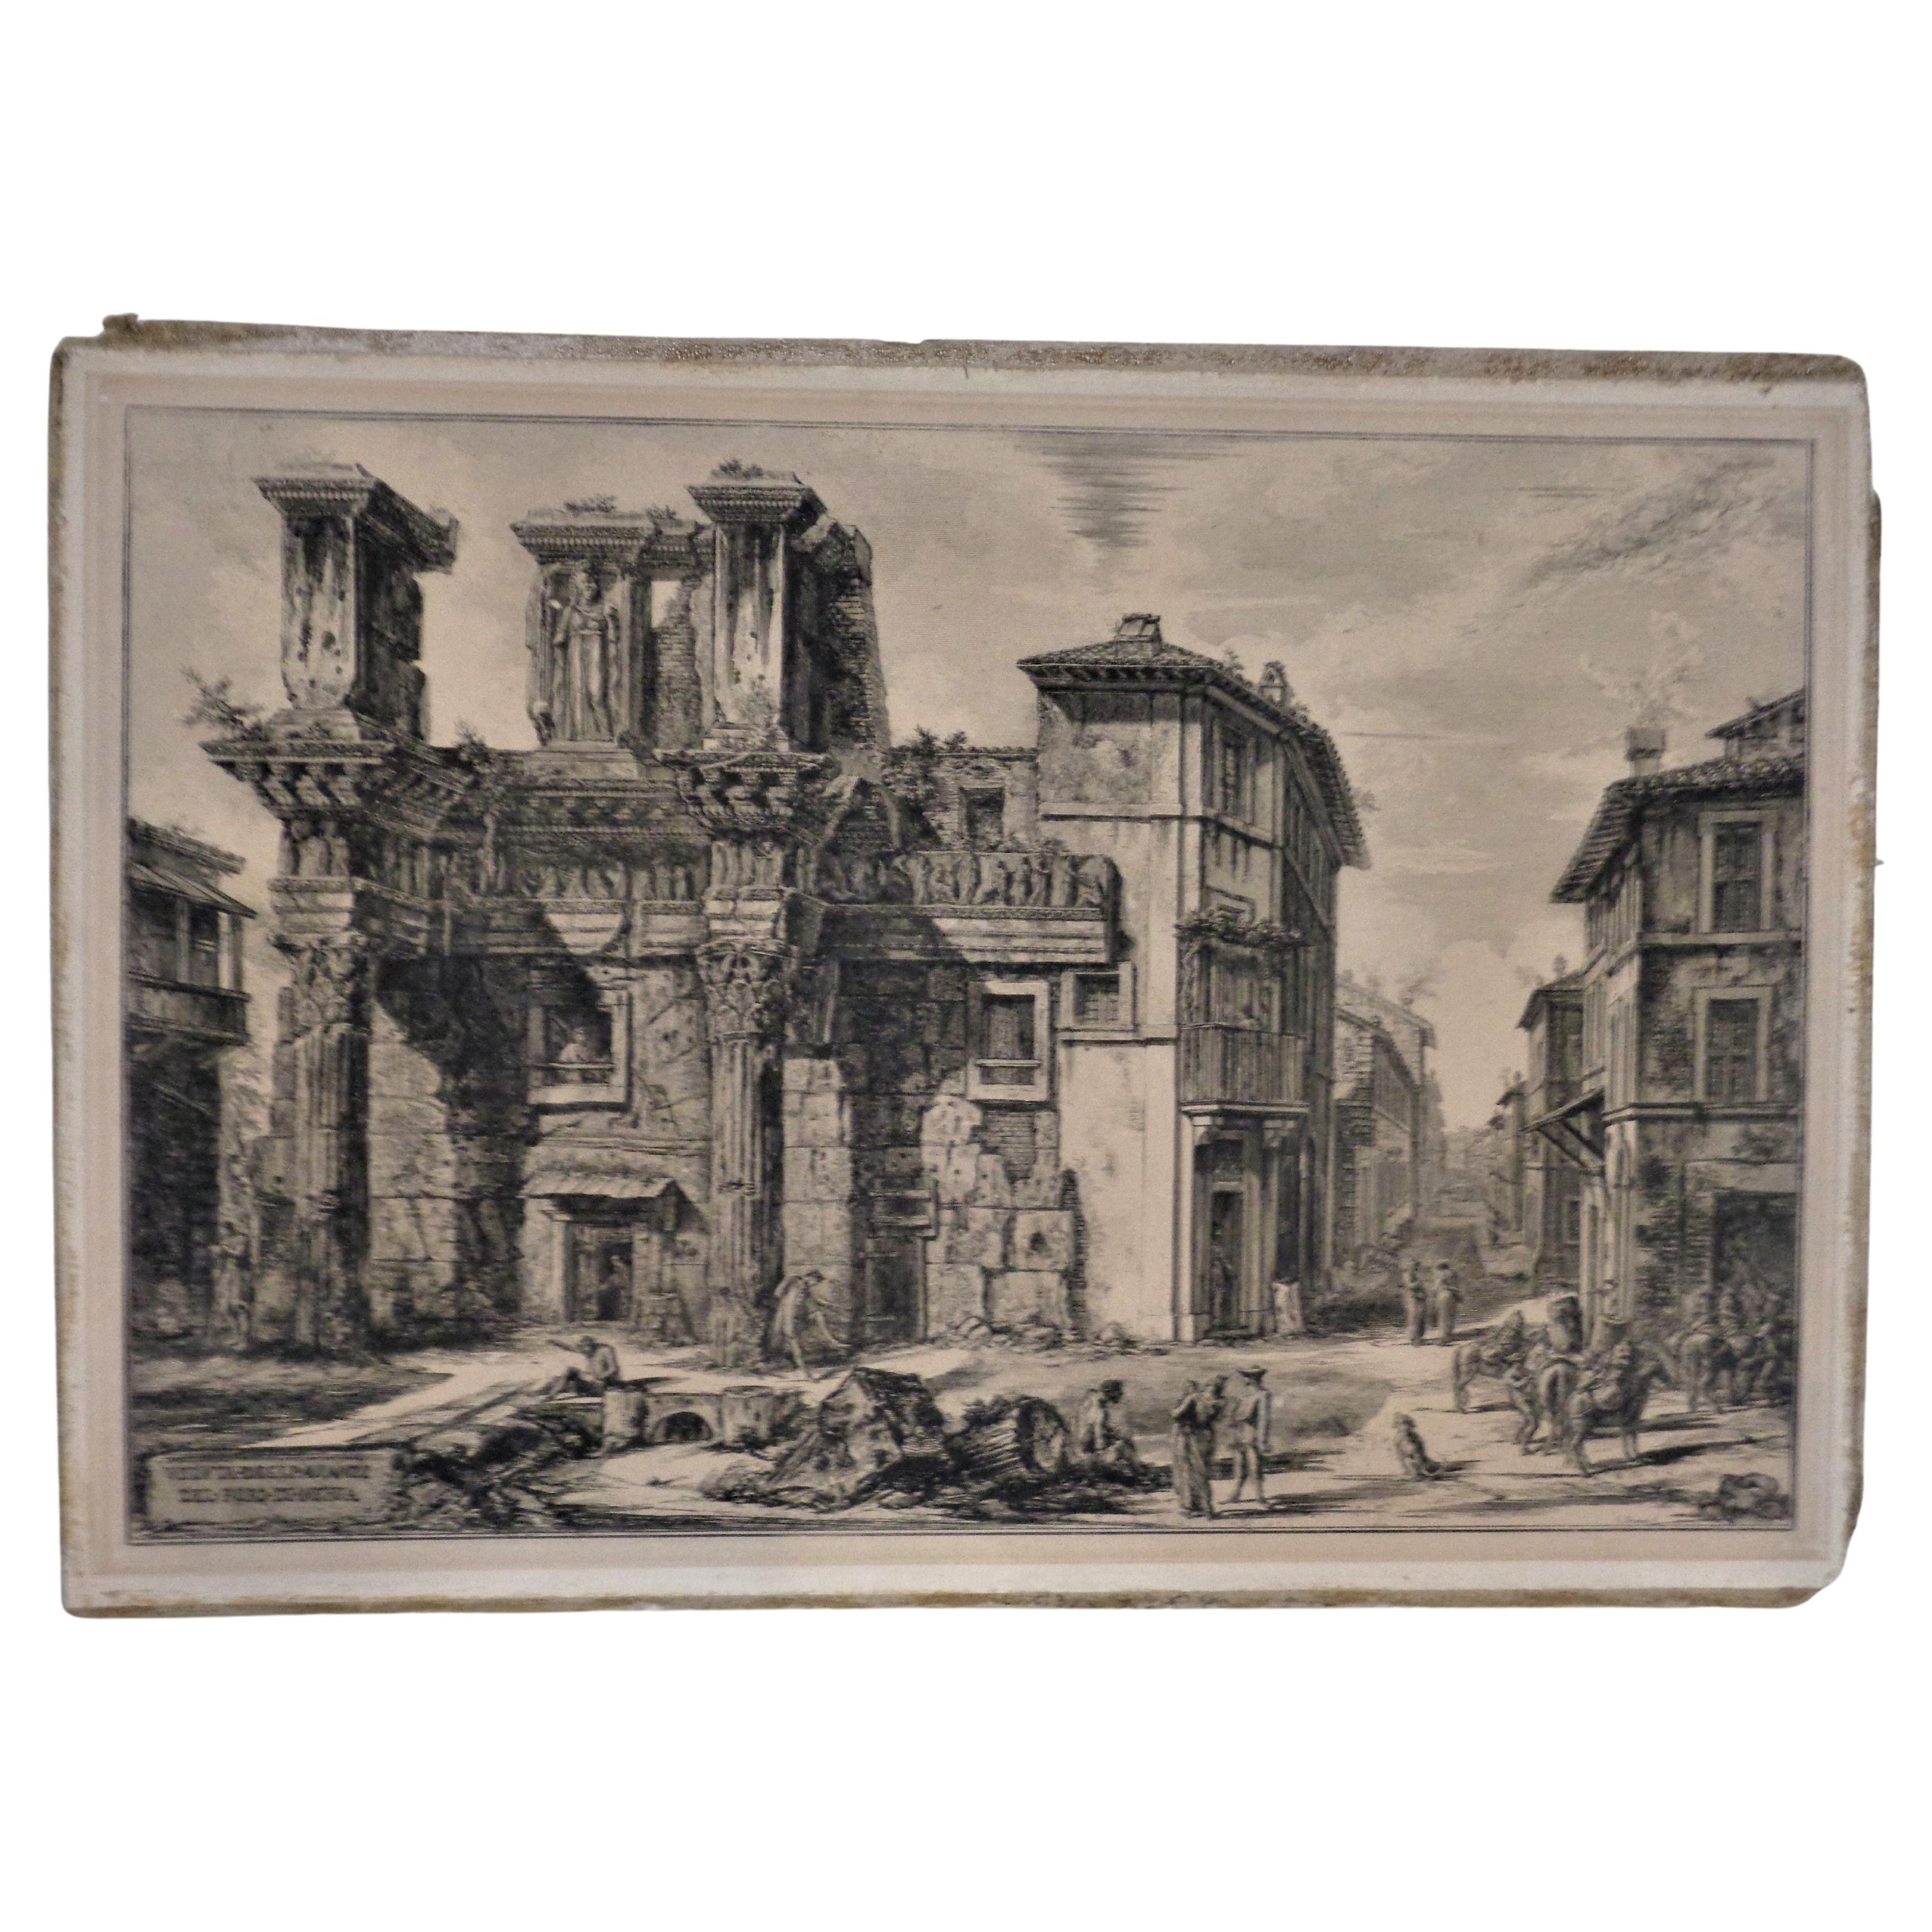 After Giovanni Battista Piranesi, The Forum of Nerva - Francesco Piranesi, 1800